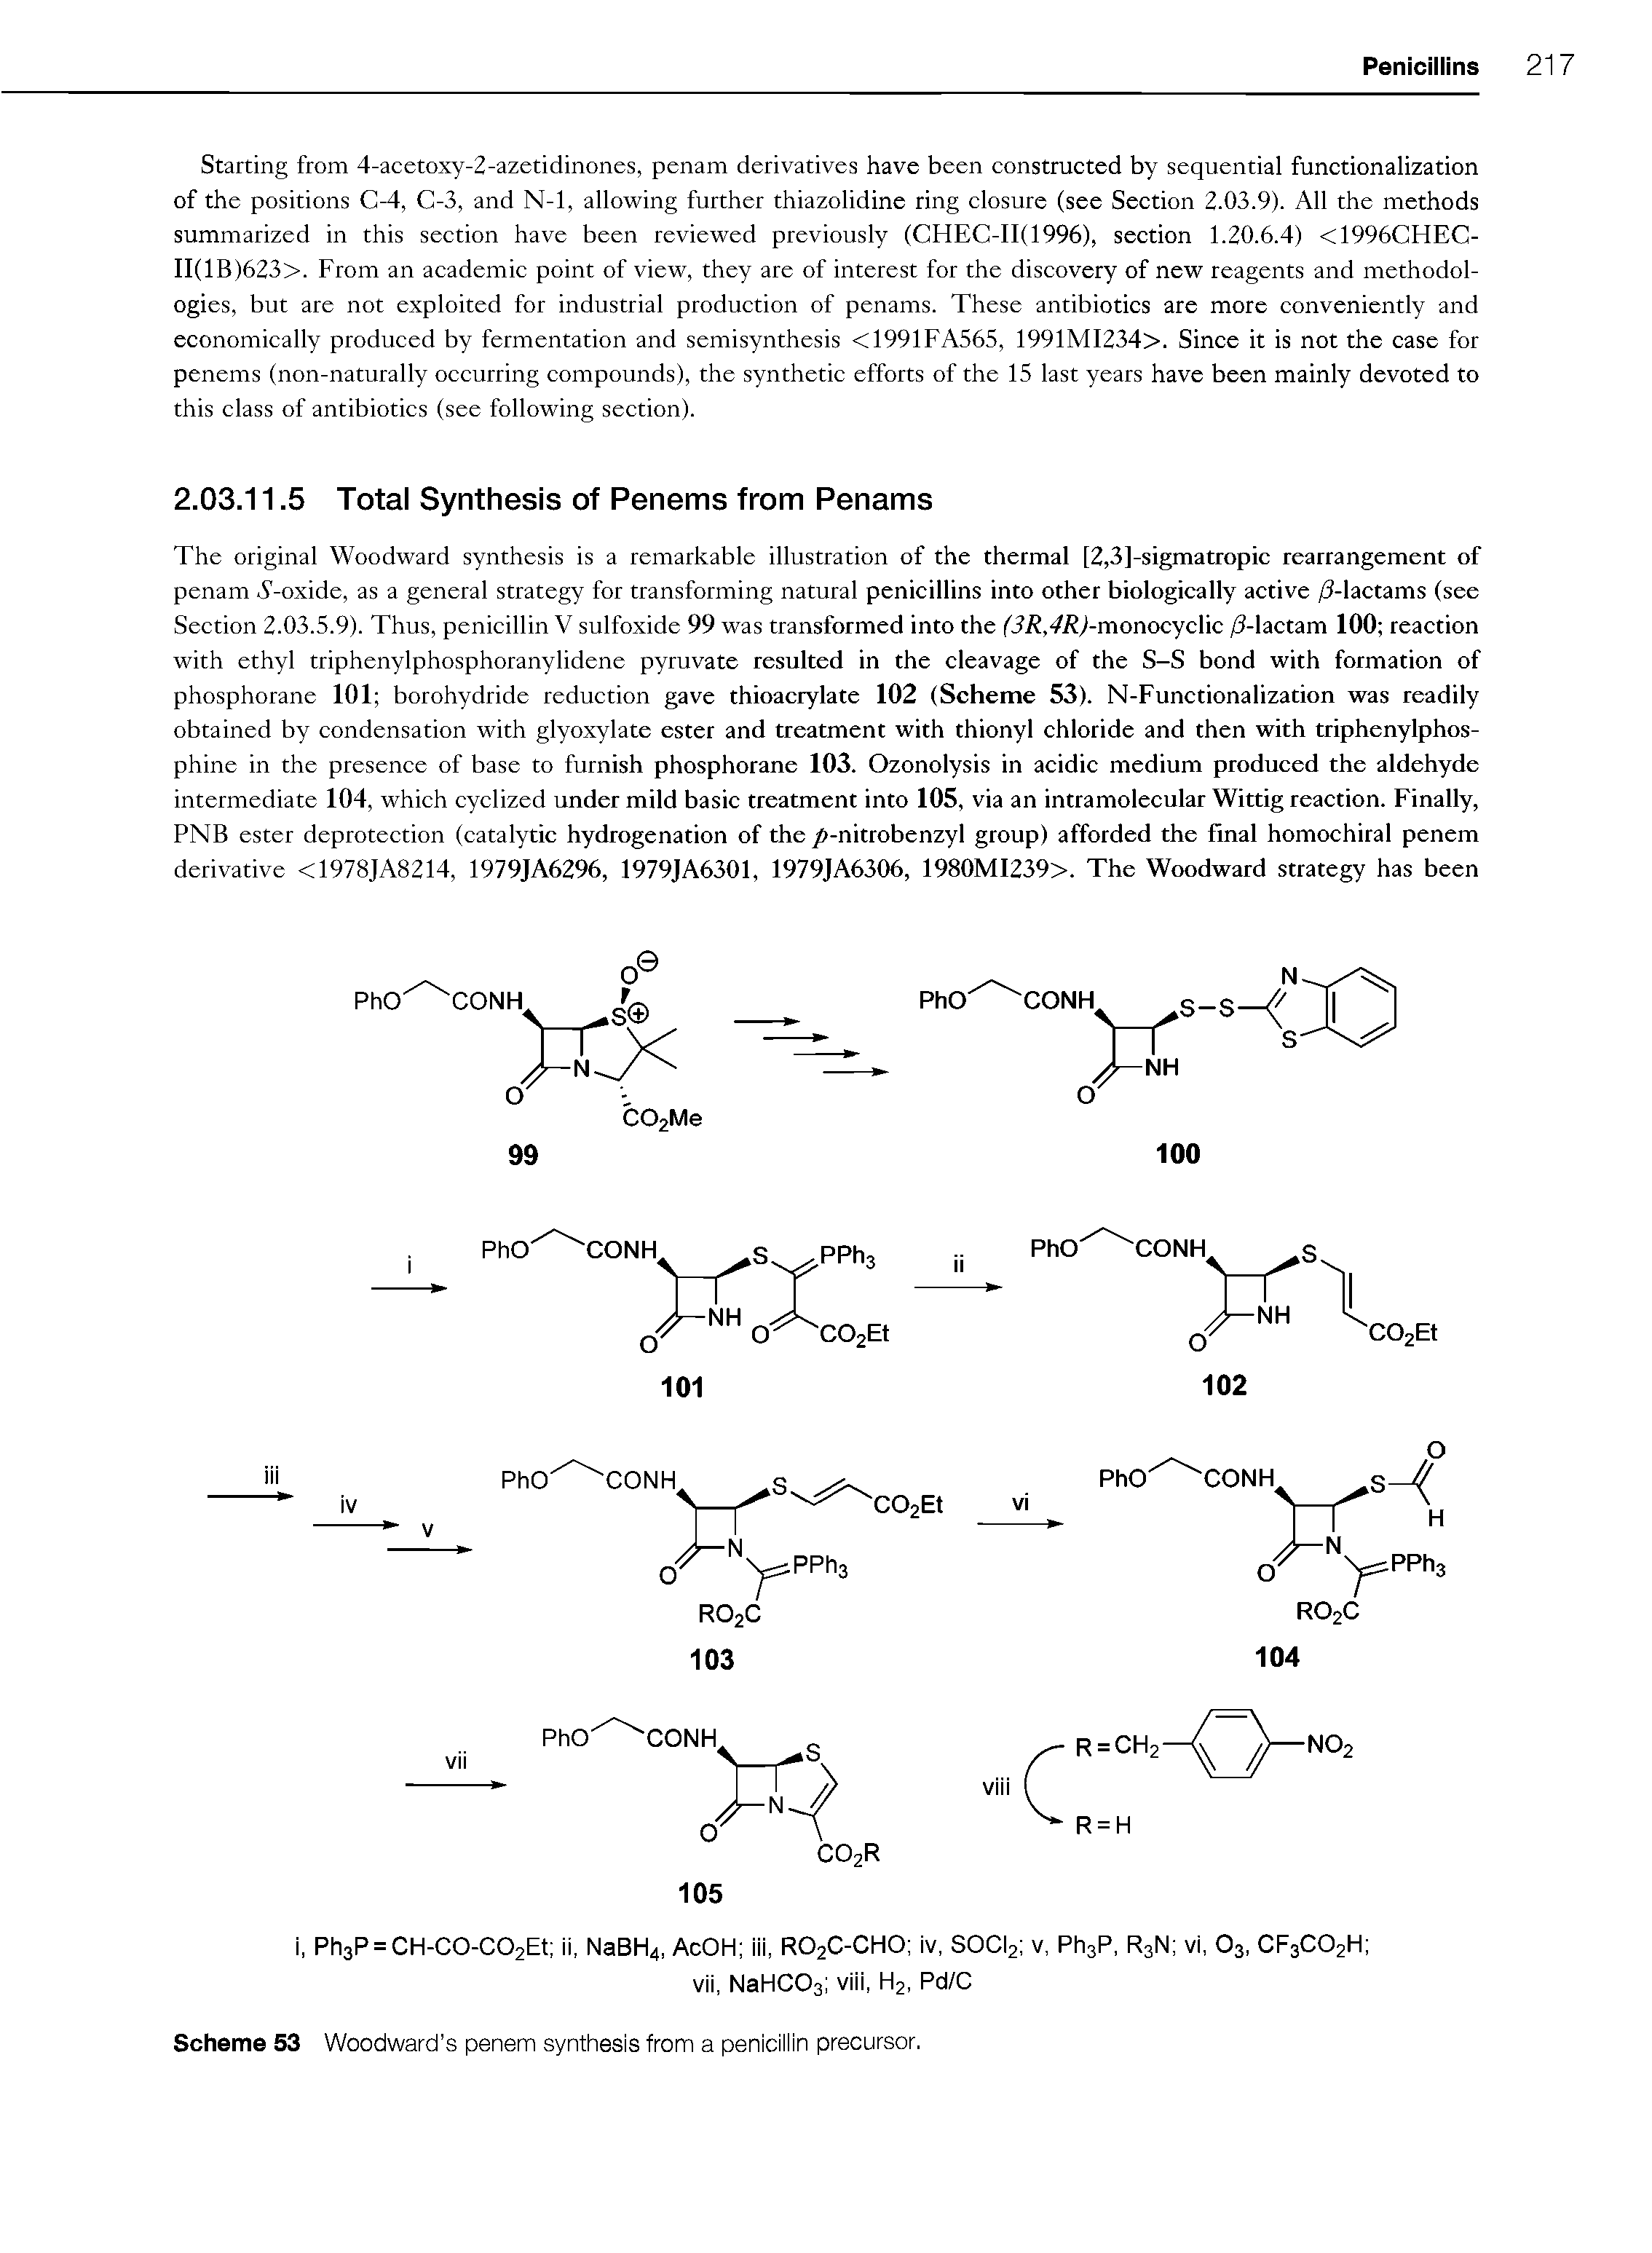 Scheme 53 Woodward s penem synthesis from a penicillin precursor.